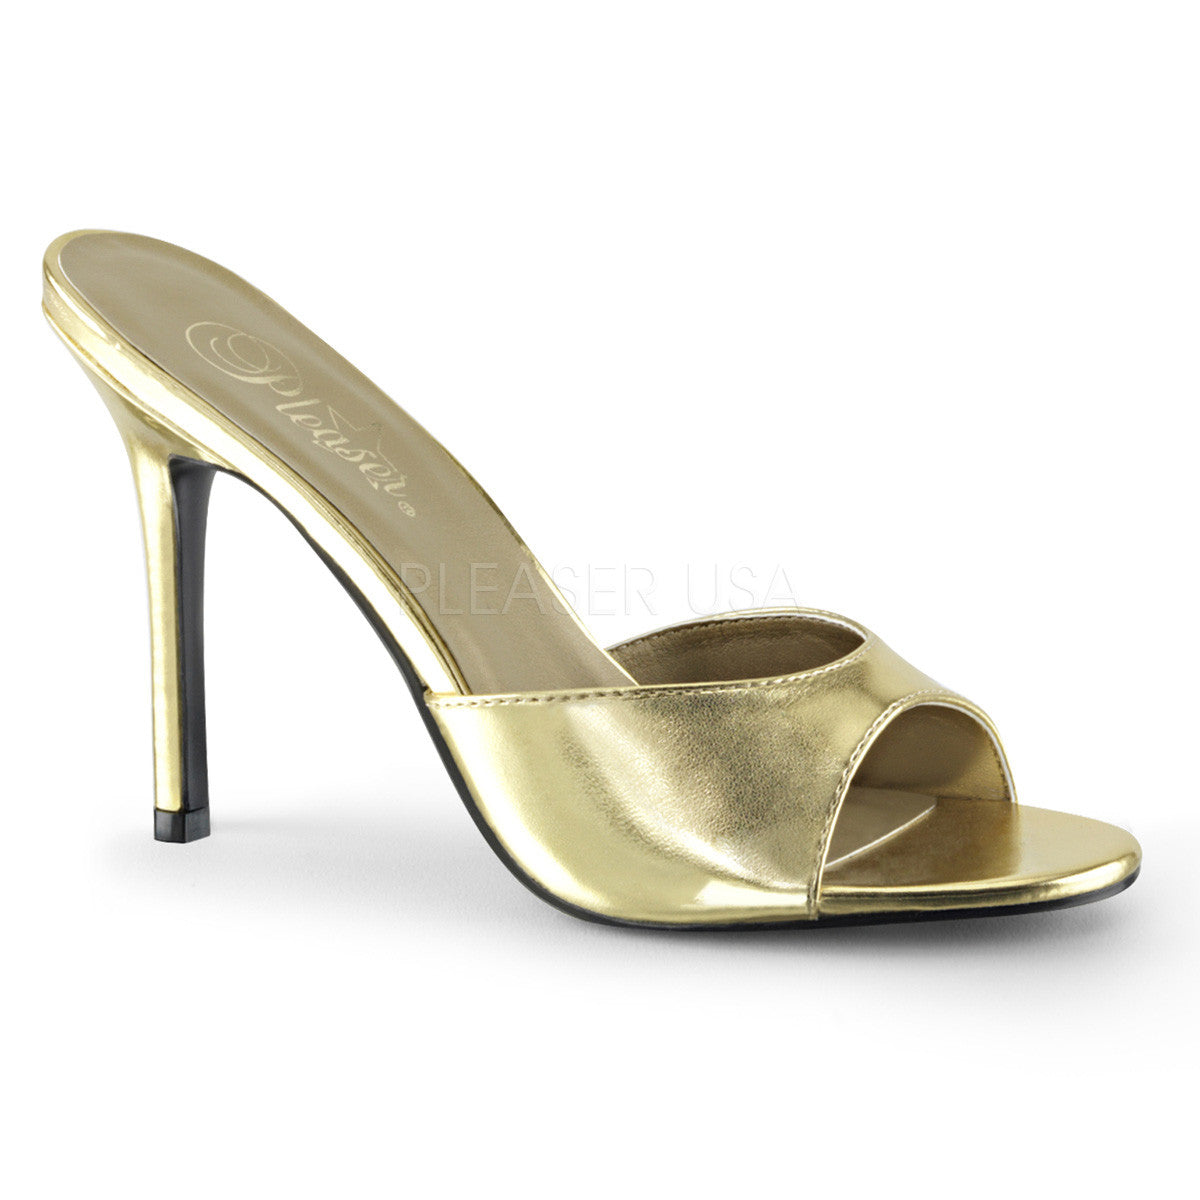 Pleaser CLASSIQUE-01 Gold Metallic Pu Slides - Shoecup.com - 1